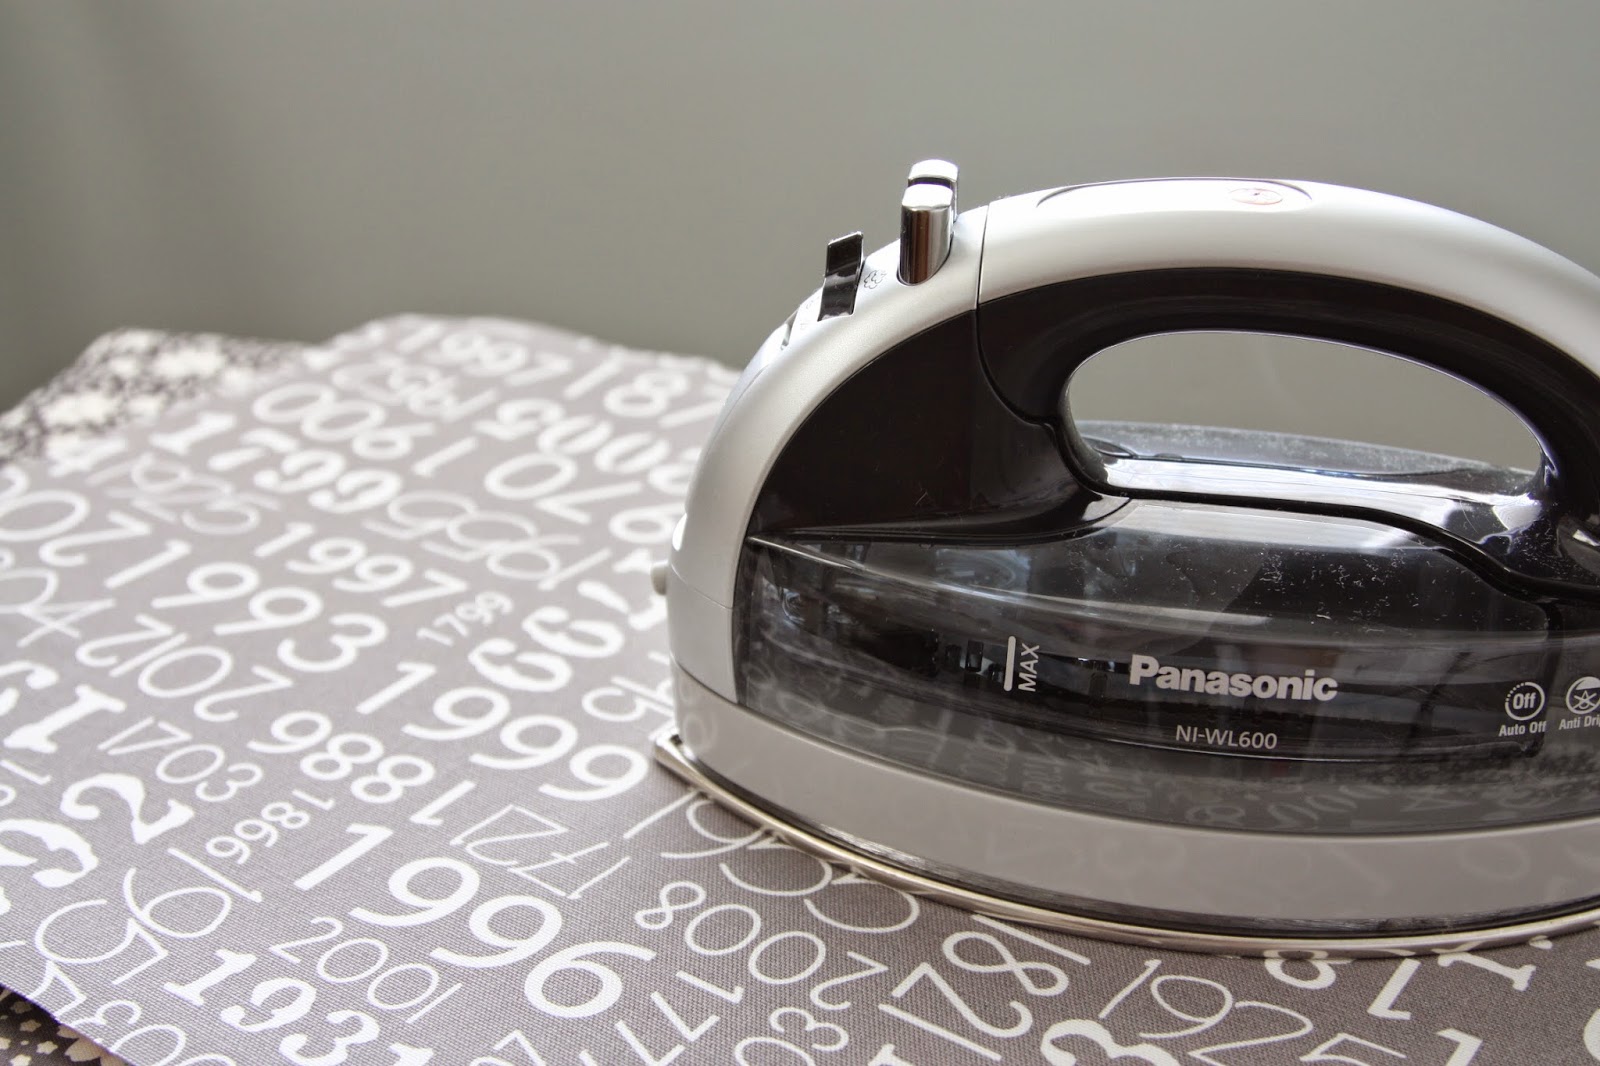 Review: Panasonic NI-WL600 Cordless Iron